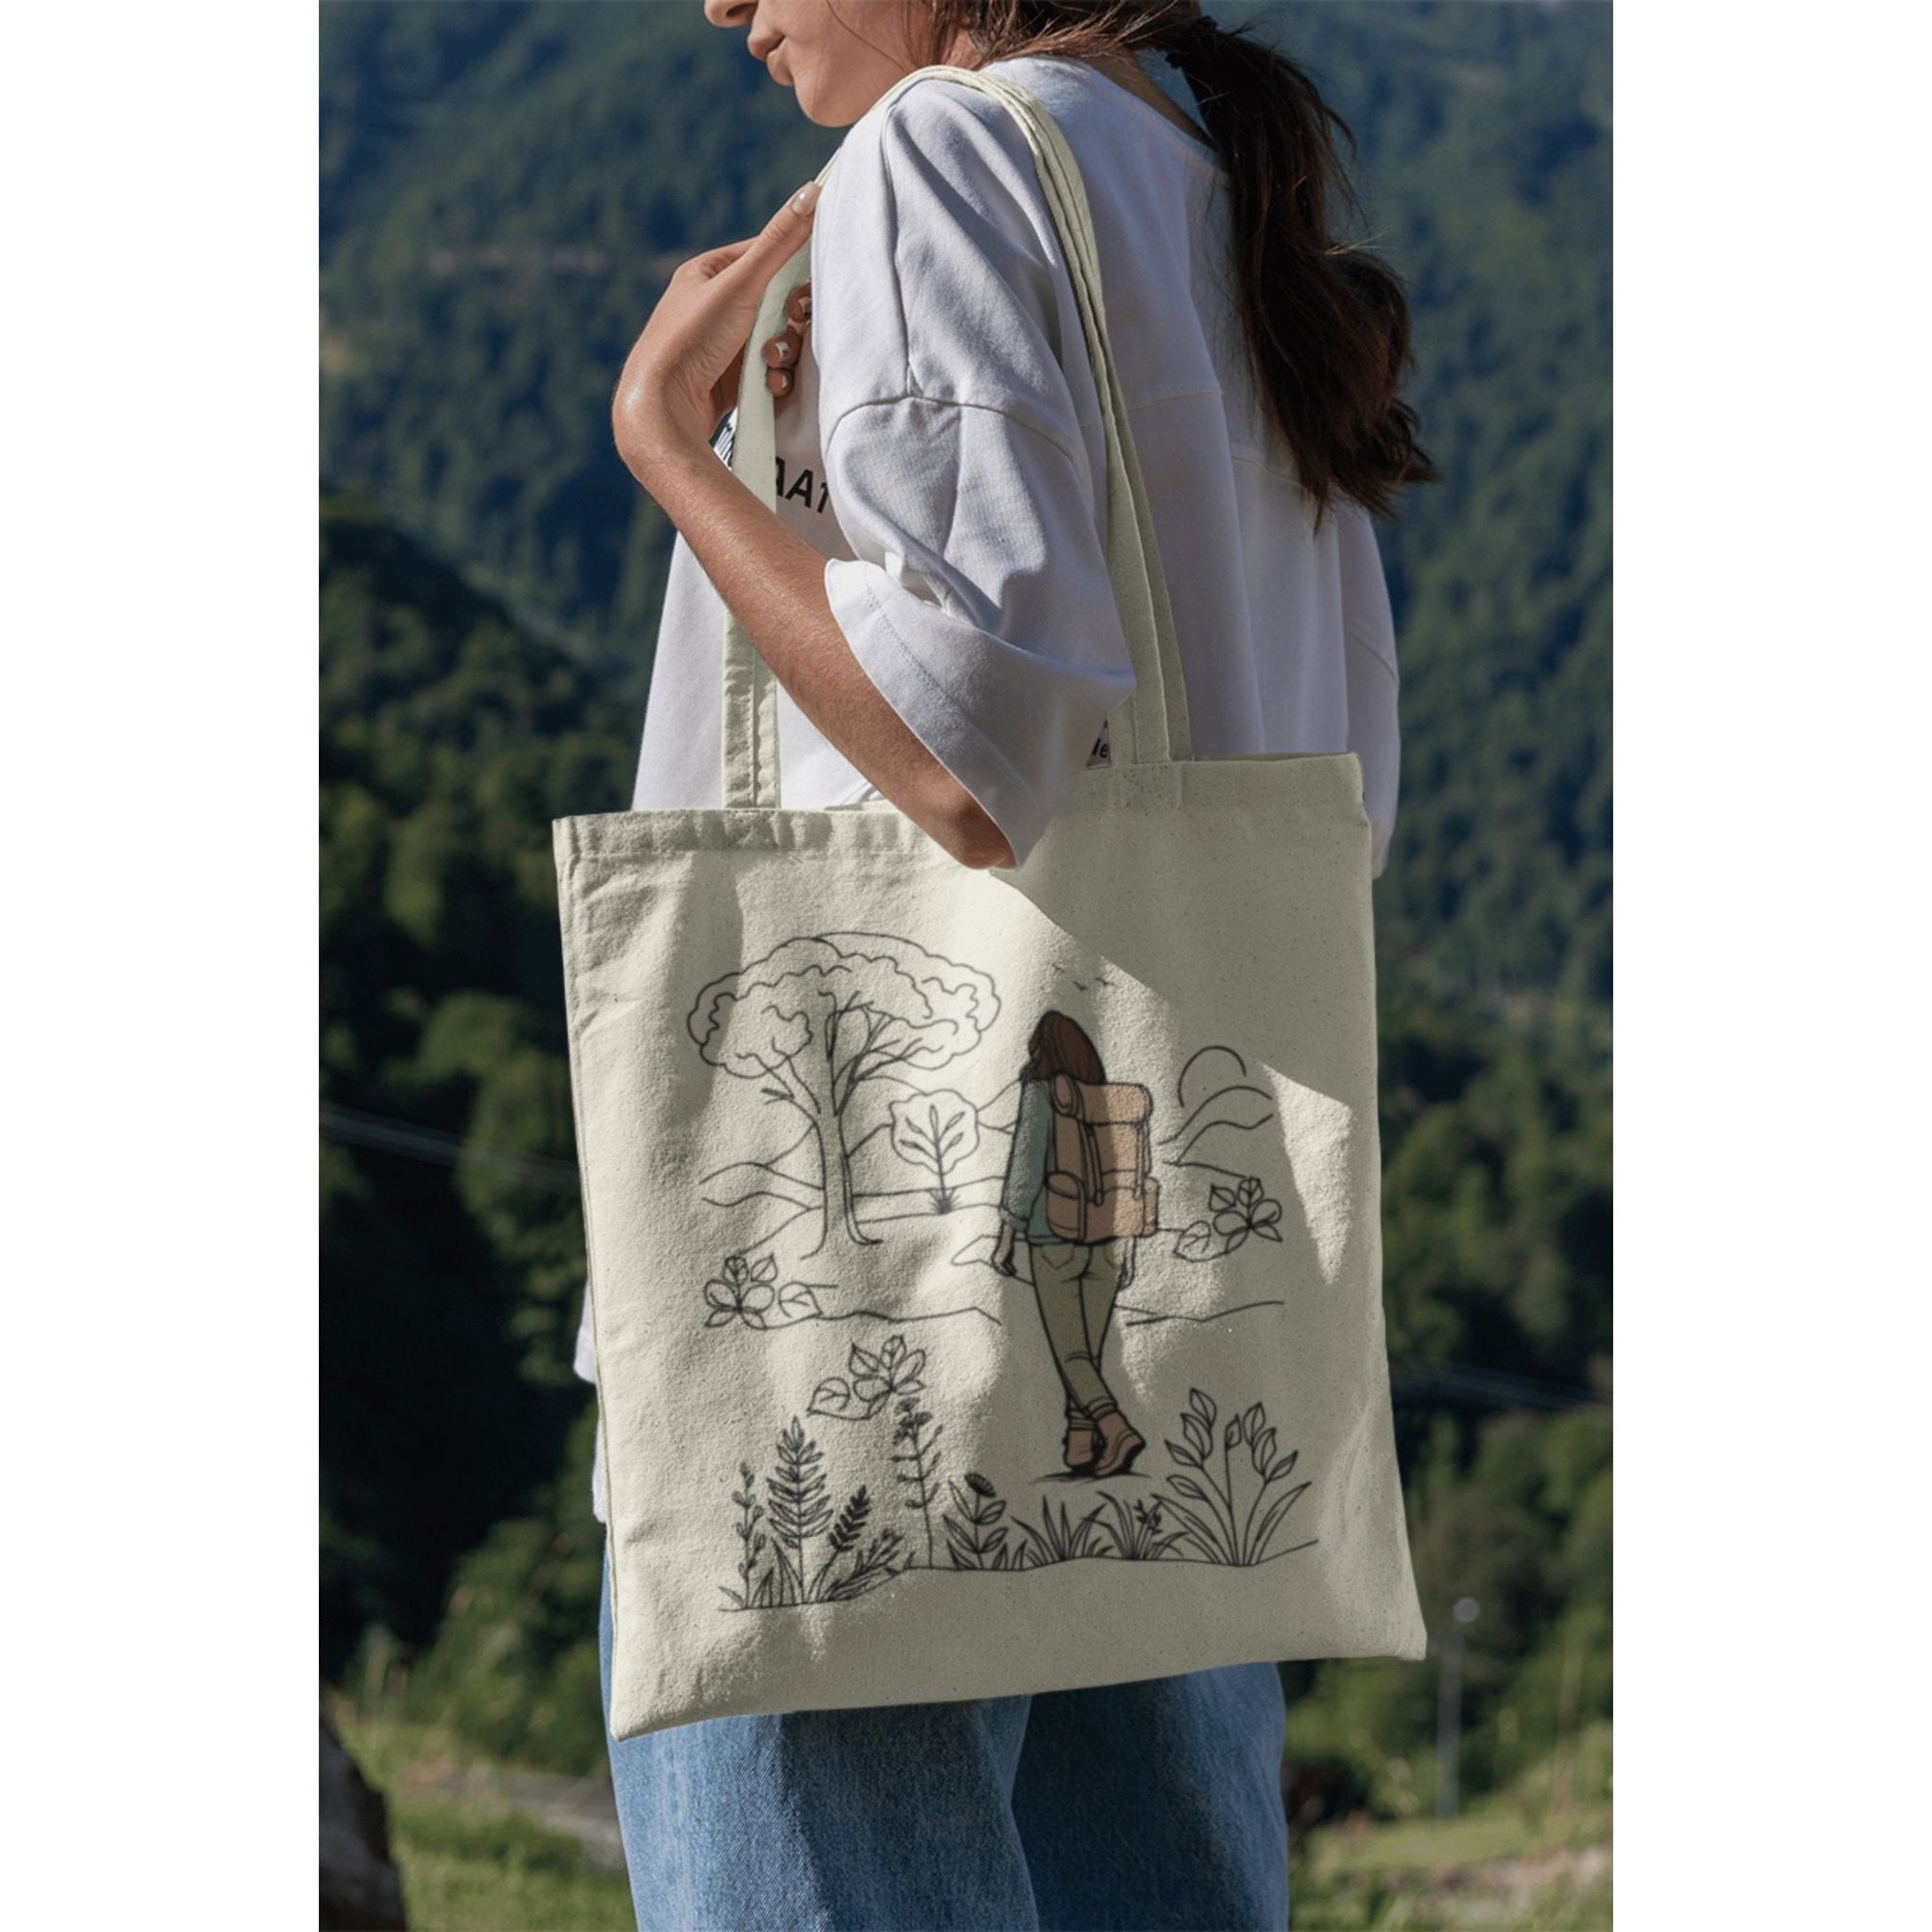 The Adventurous Woman Tote Bag